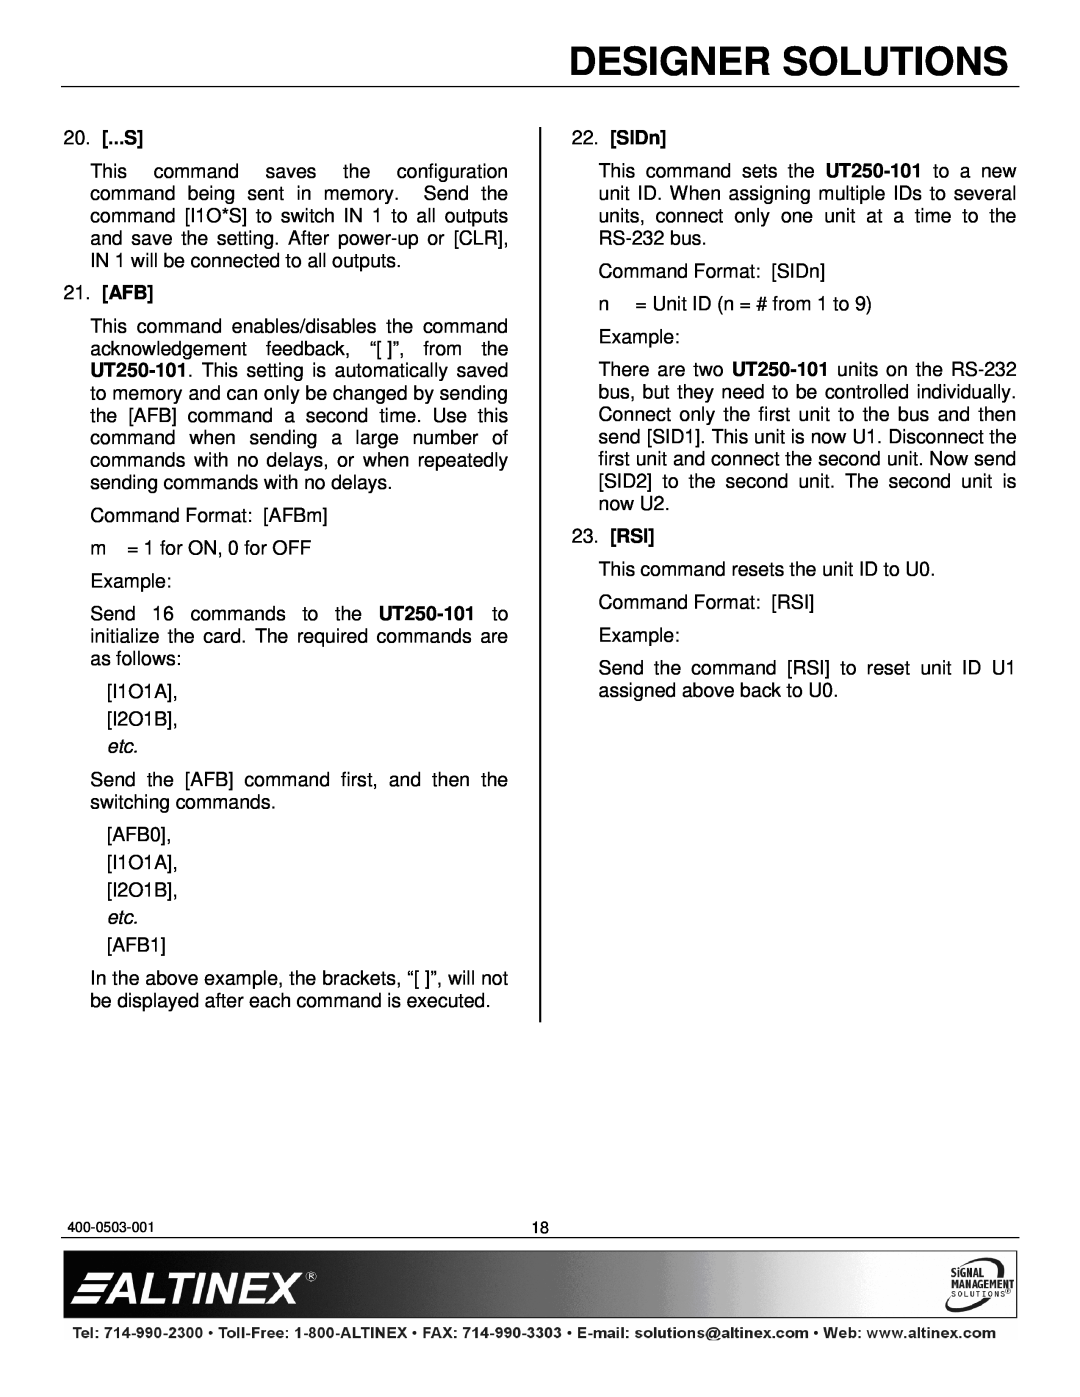 Altinex UT250-101 manual 20. ...S, Afb, SIDn, Rsi, Designer Solutions 